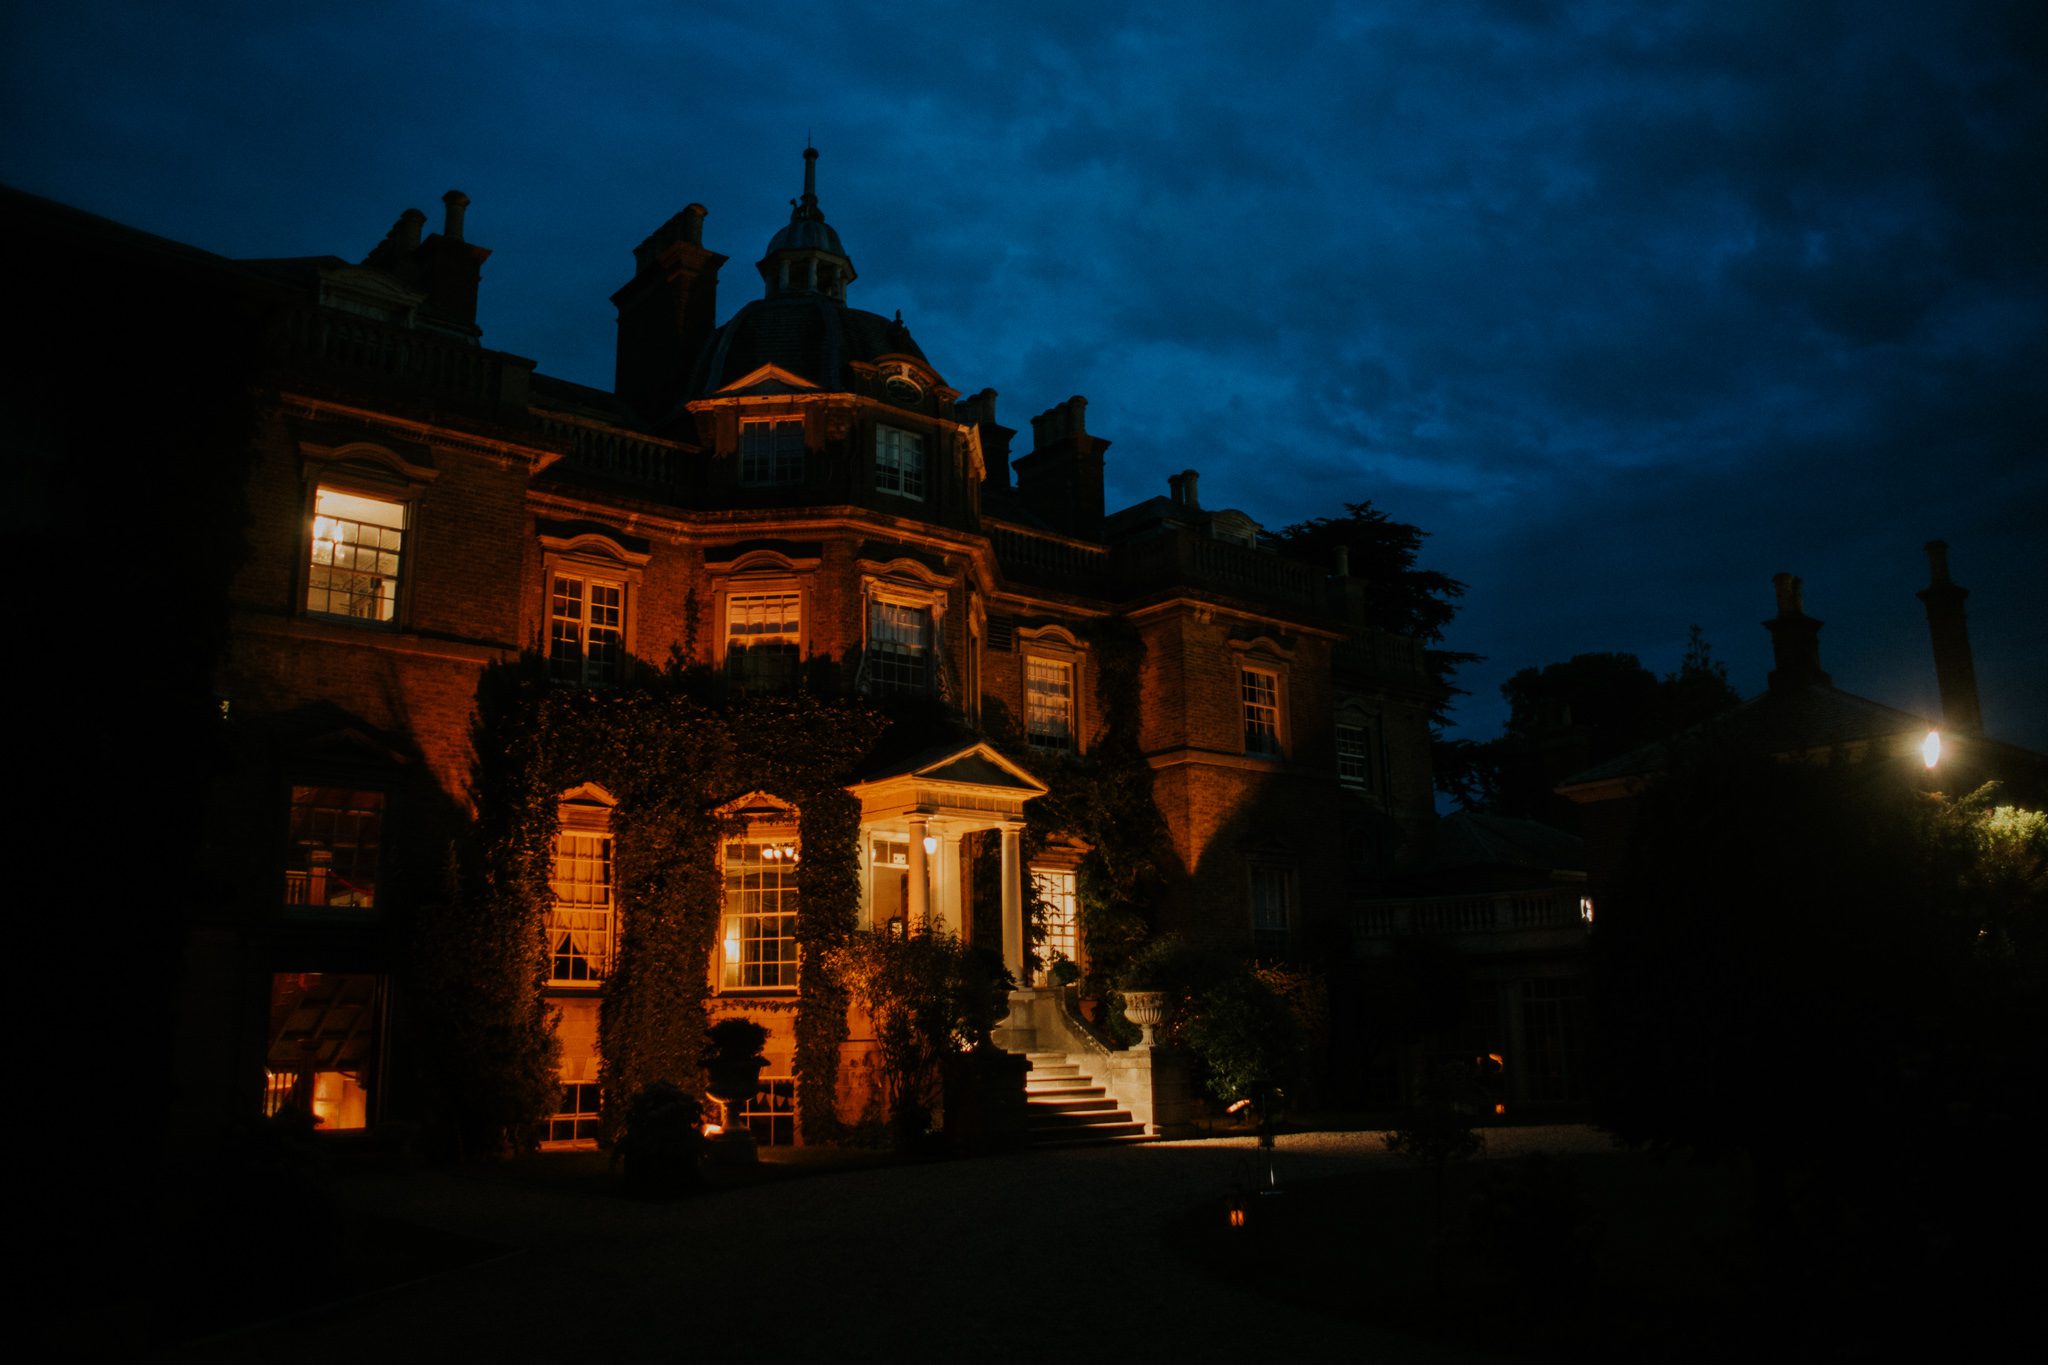 Hampton Court House wedding venue at night